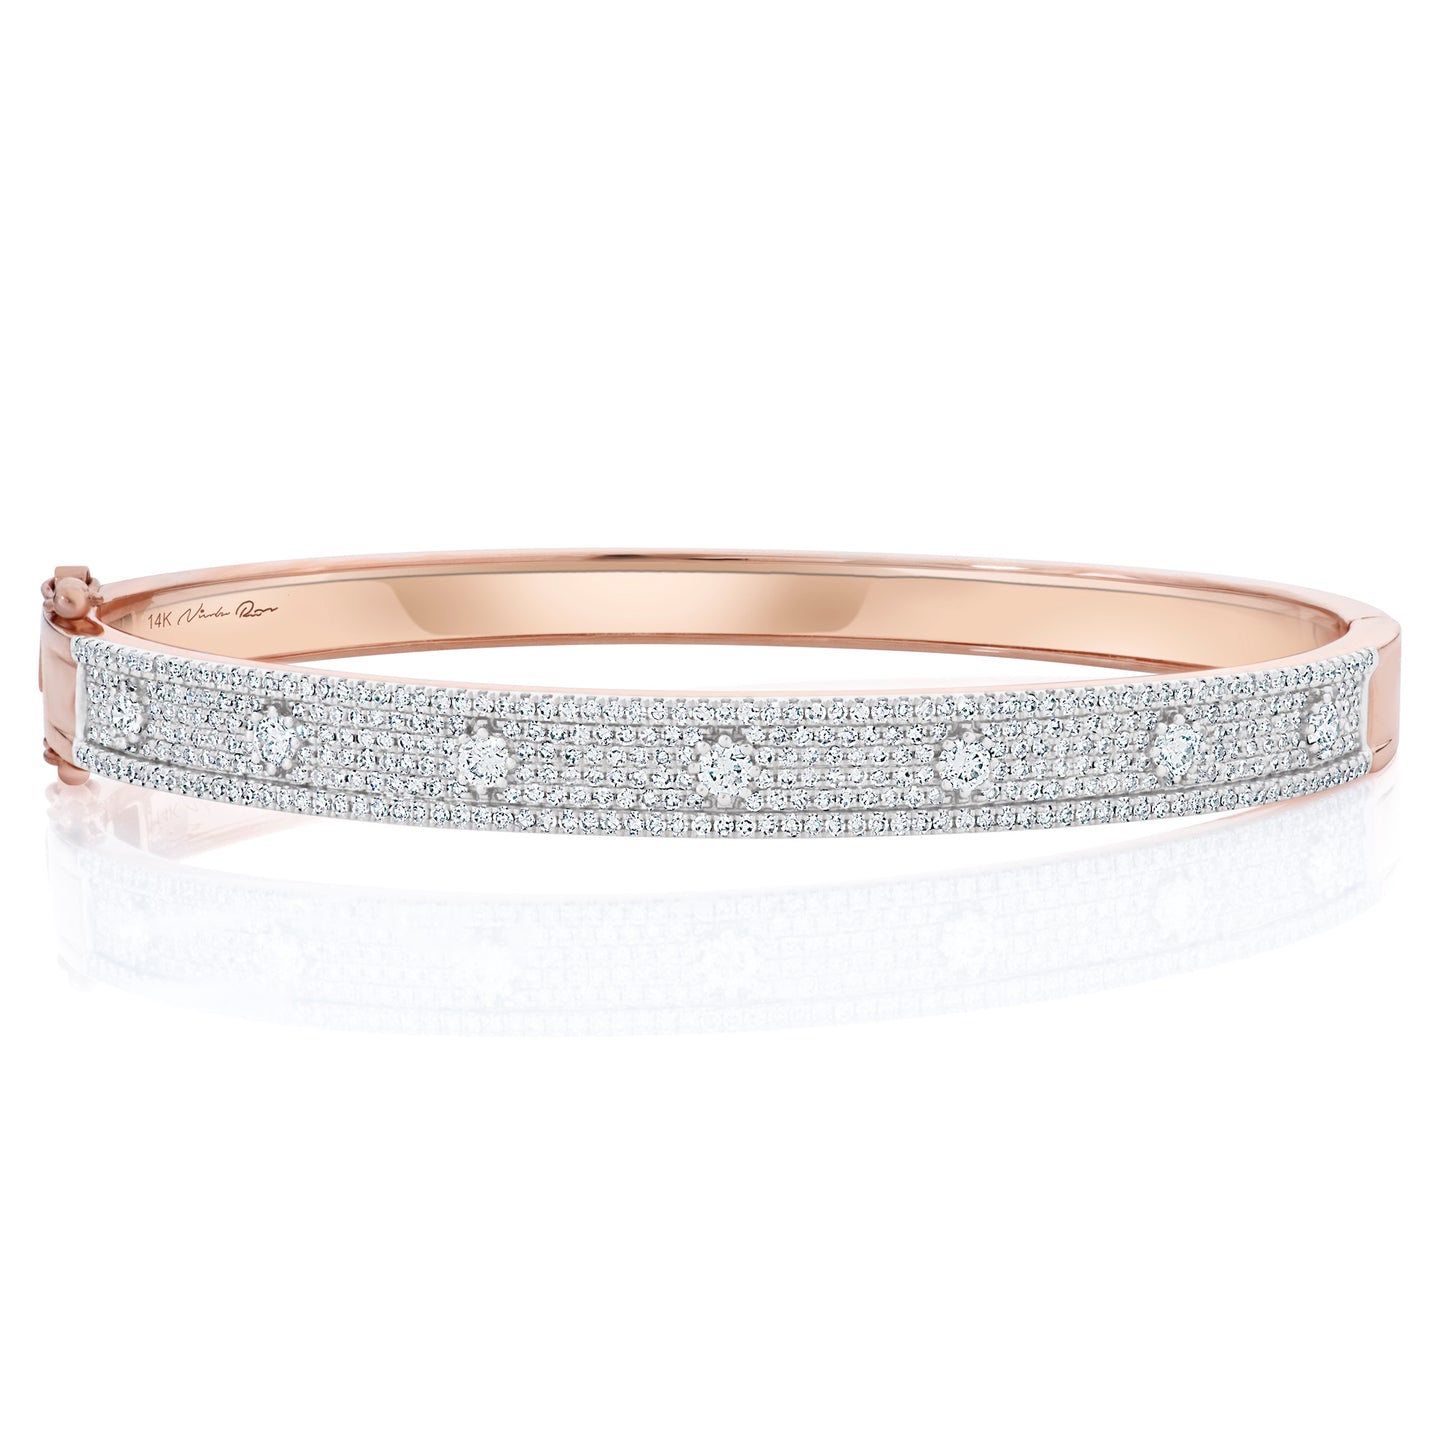 18K White Gold Micro Pavé Diamond Bangle Bracelet